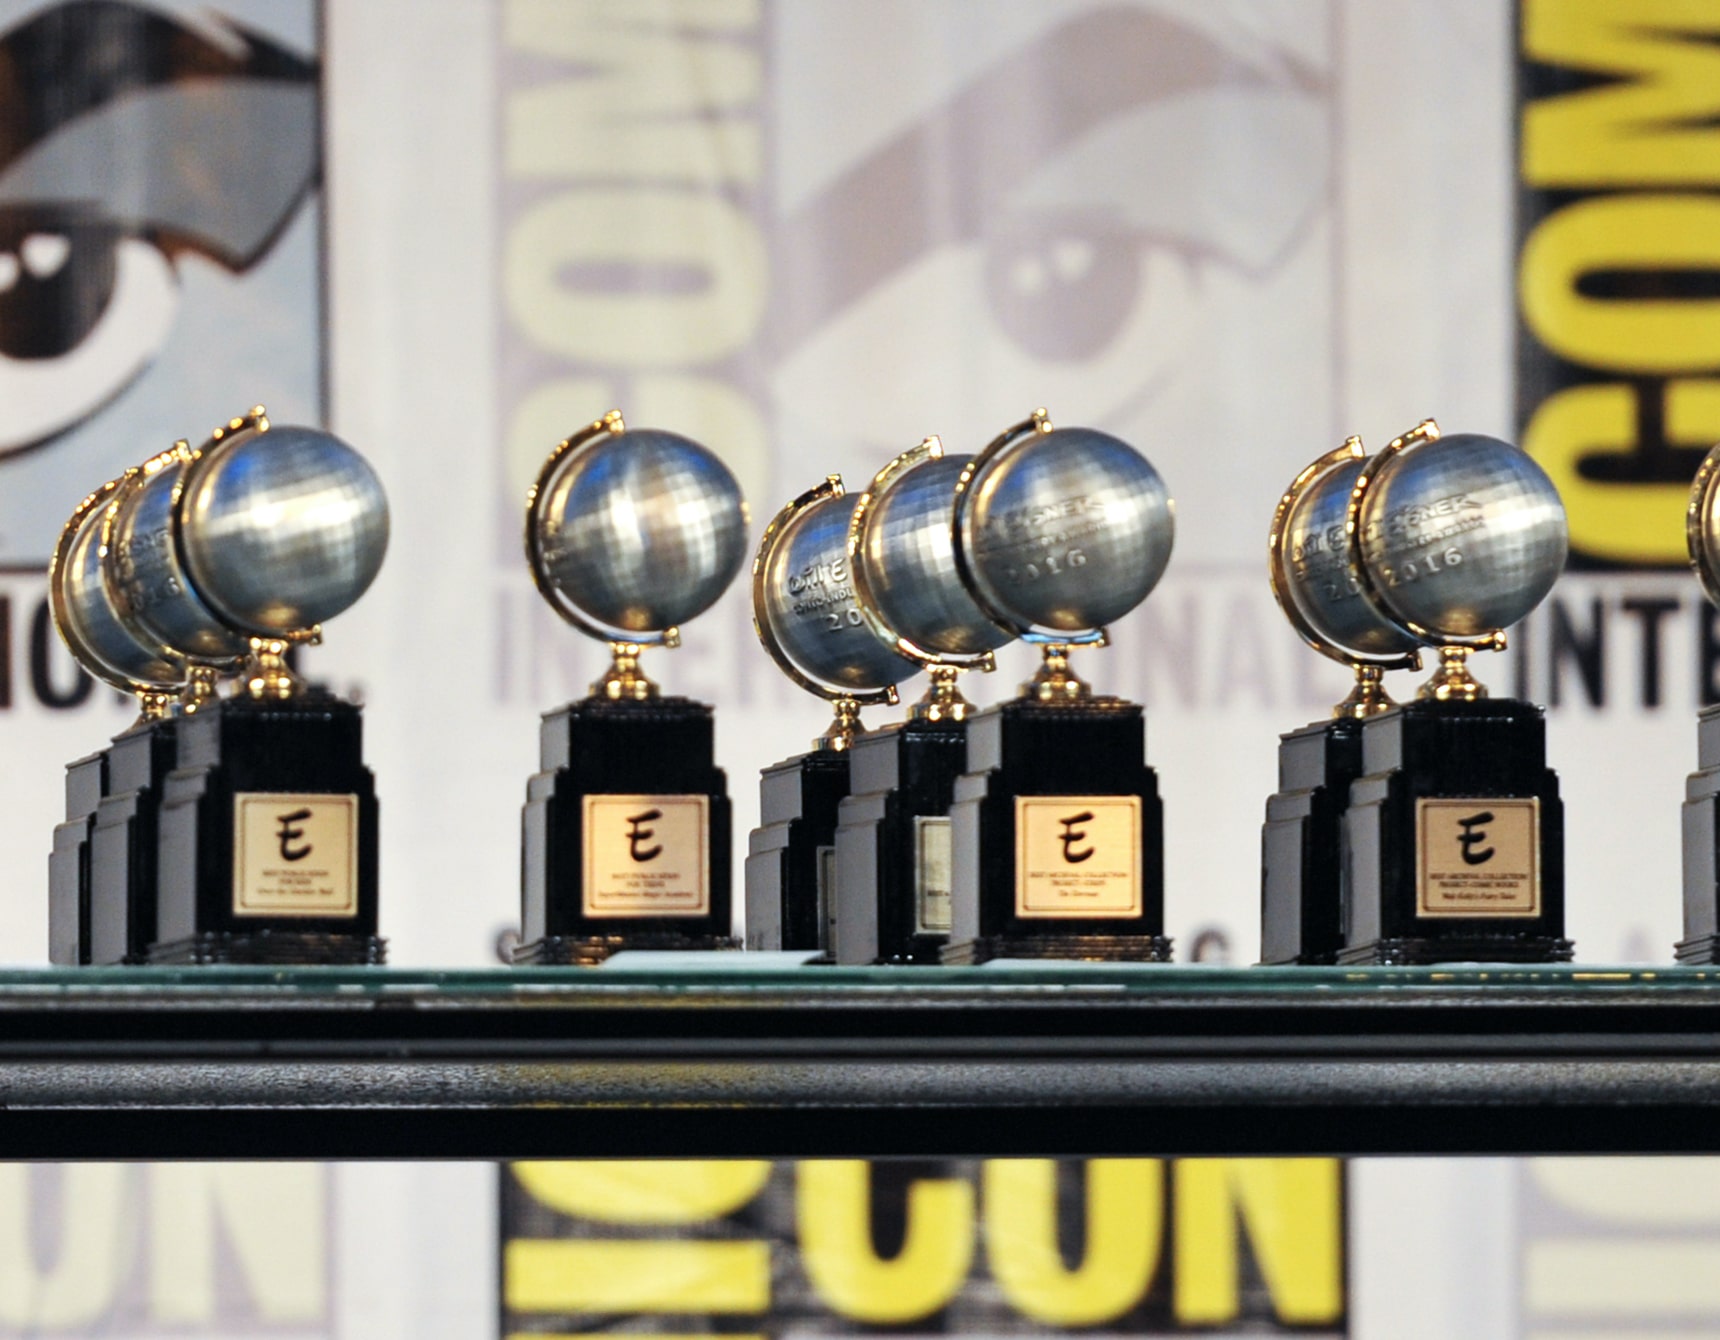 2021 Eisner Awards nominations announced